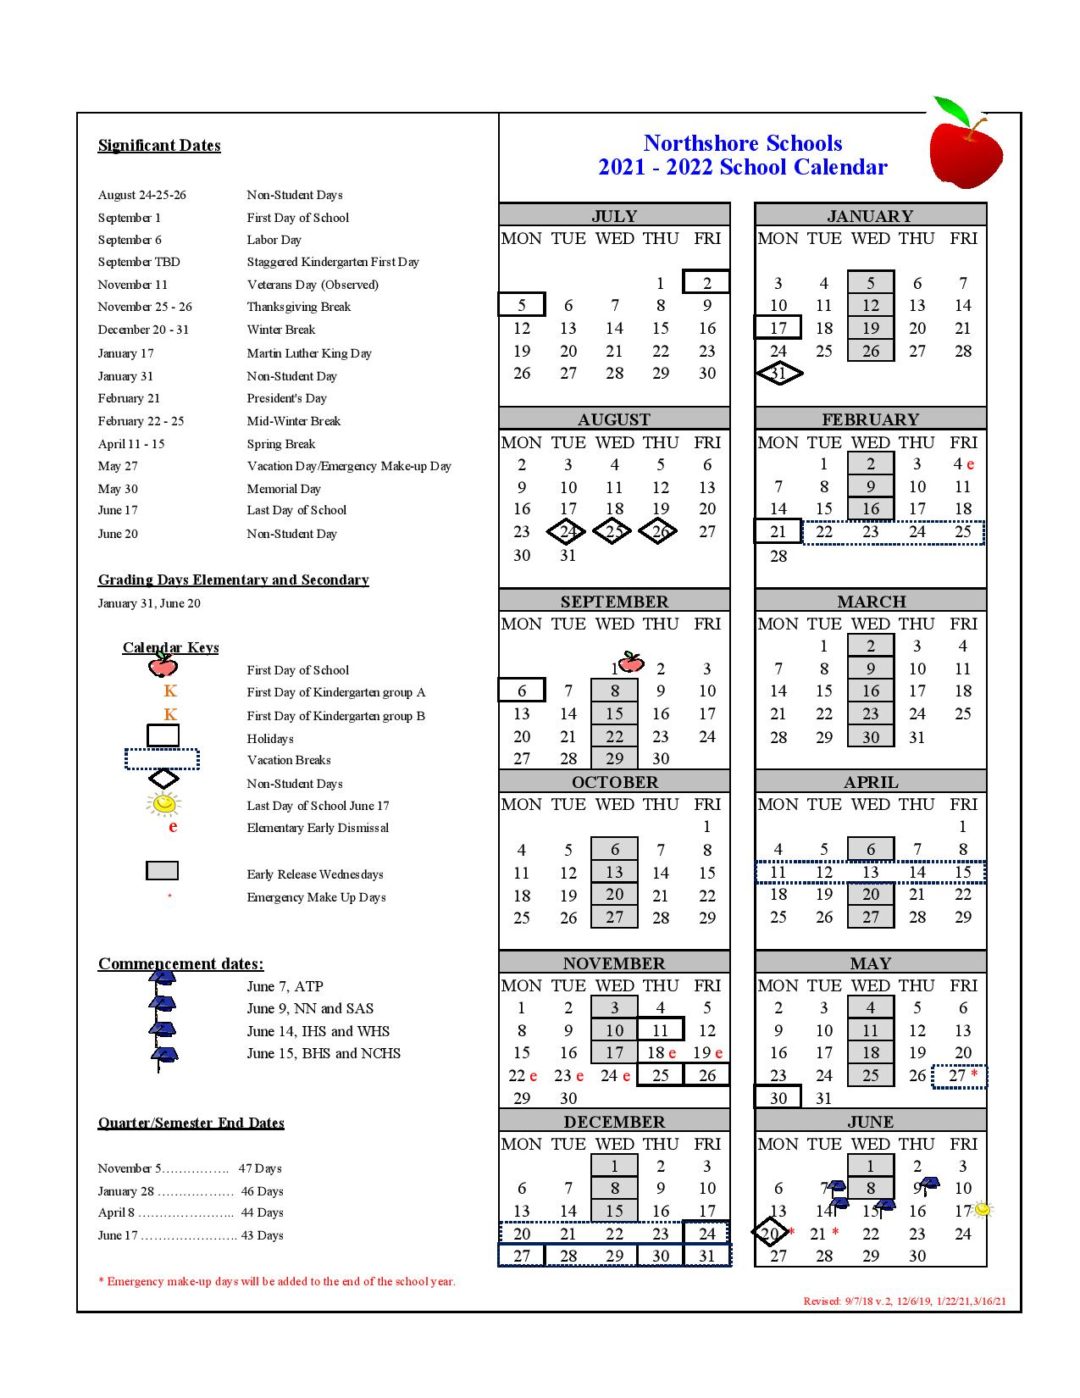 Northshore School District Calendar 20212022 & Holidays